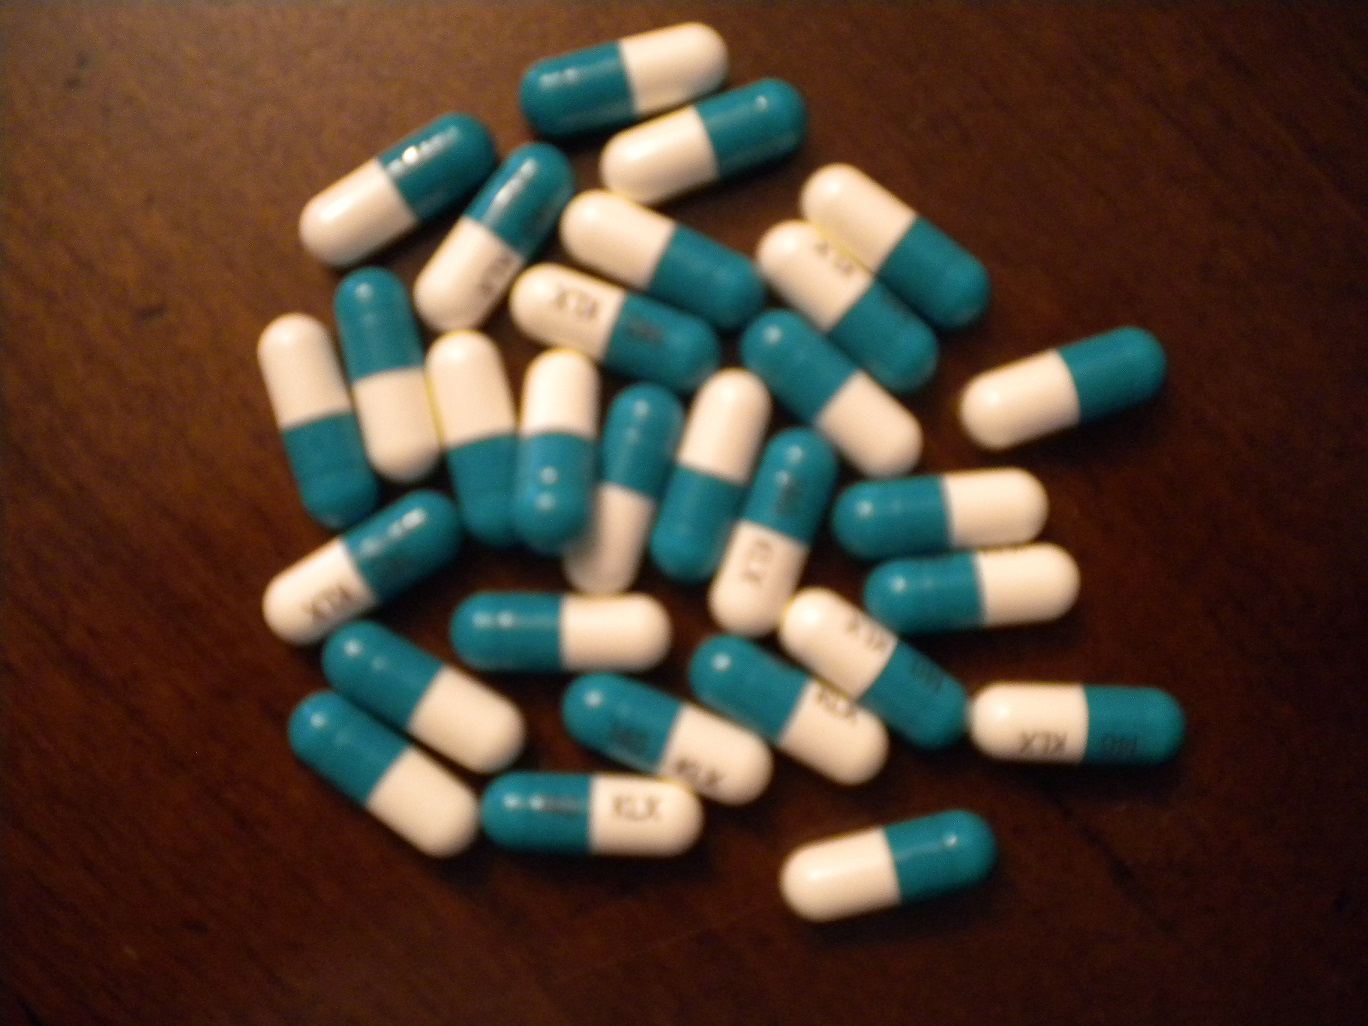 Cephalexin 500 mg 30 ct 